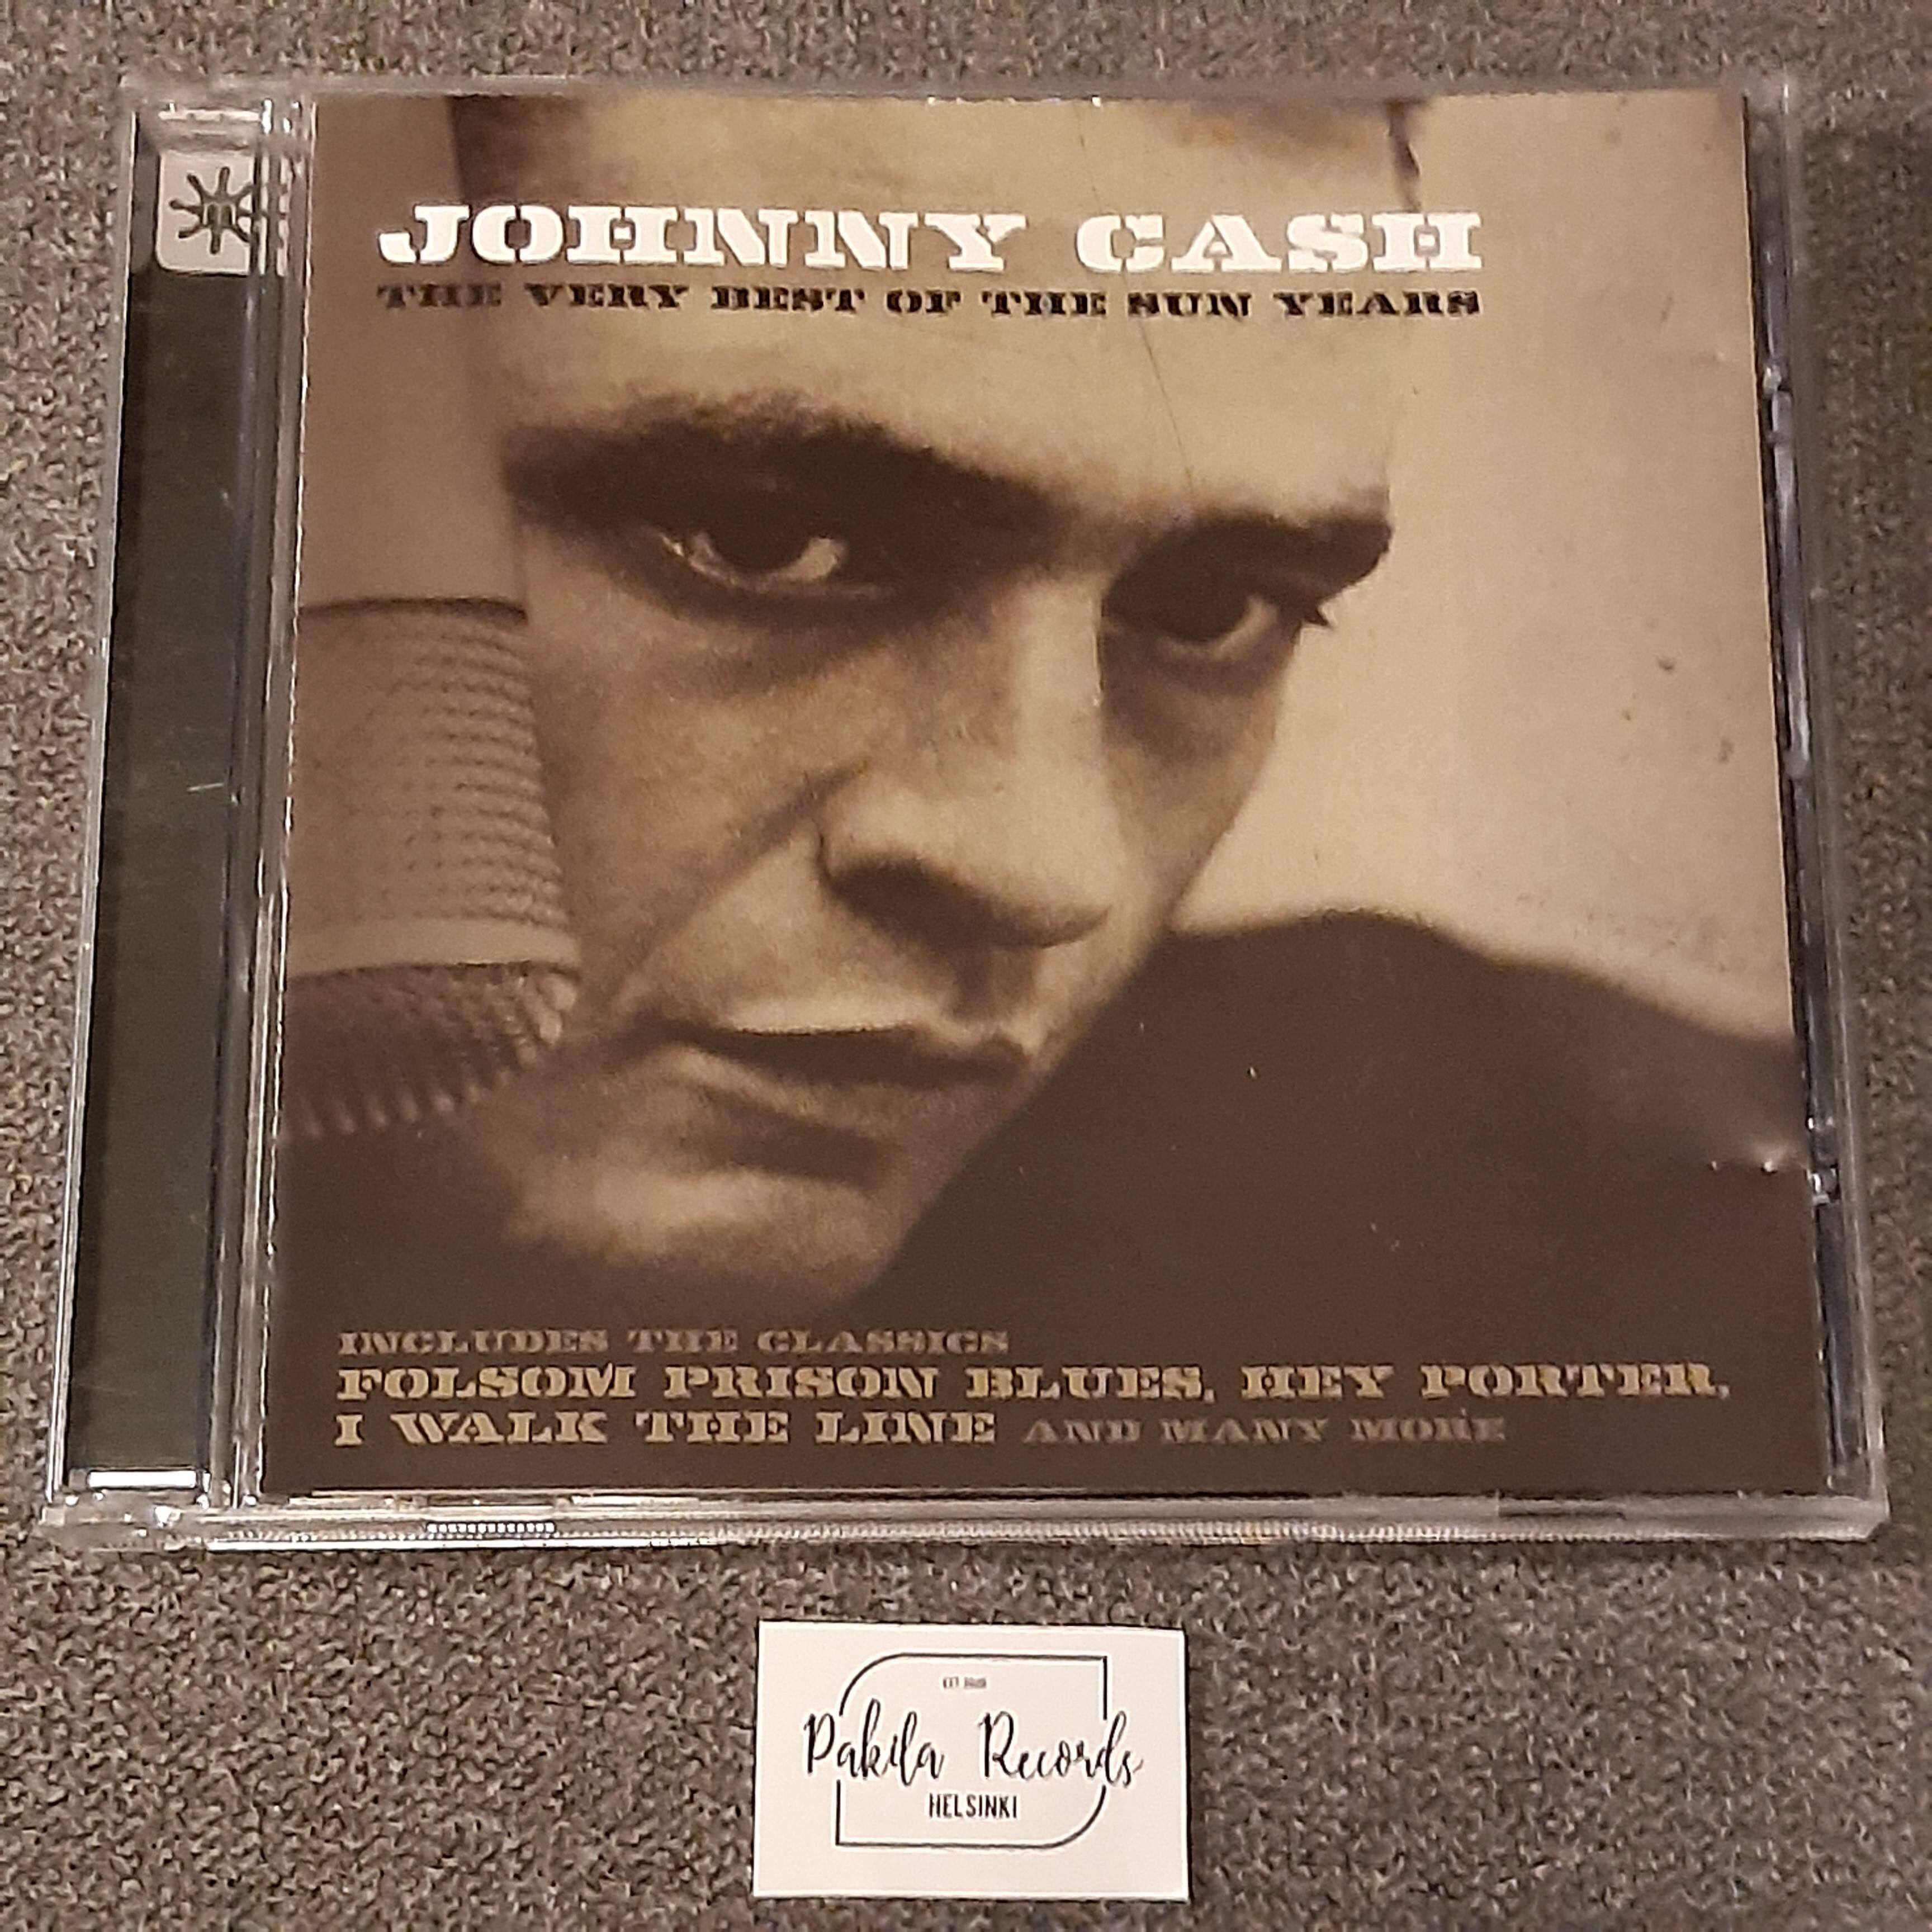 Johnny Cash - The Very Best Of The Sun Years - CD (käytetty)